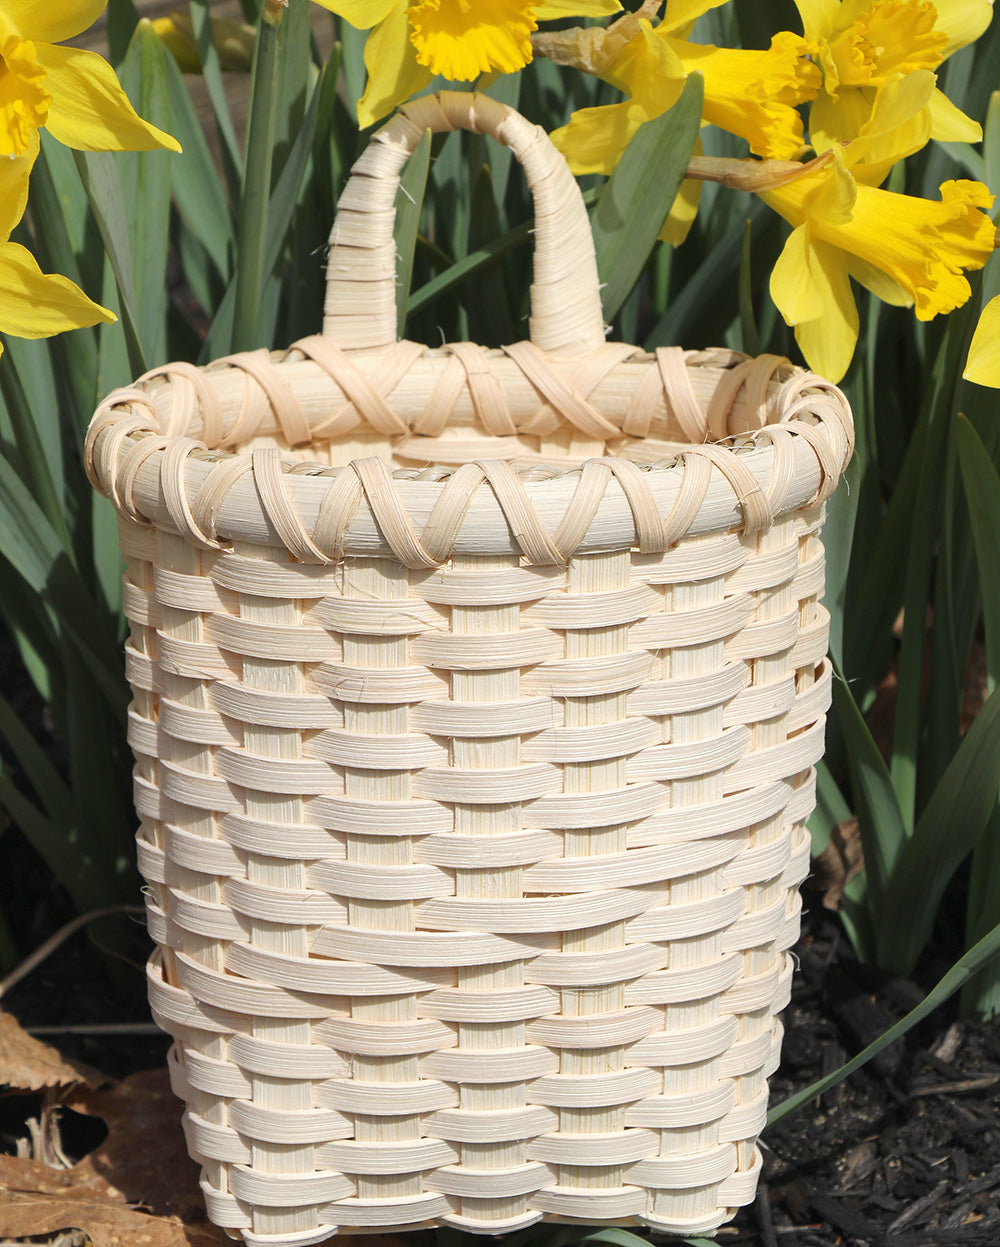 Workshop: Weave a Wall Hanging Flower Basket- Saturday, June 1st